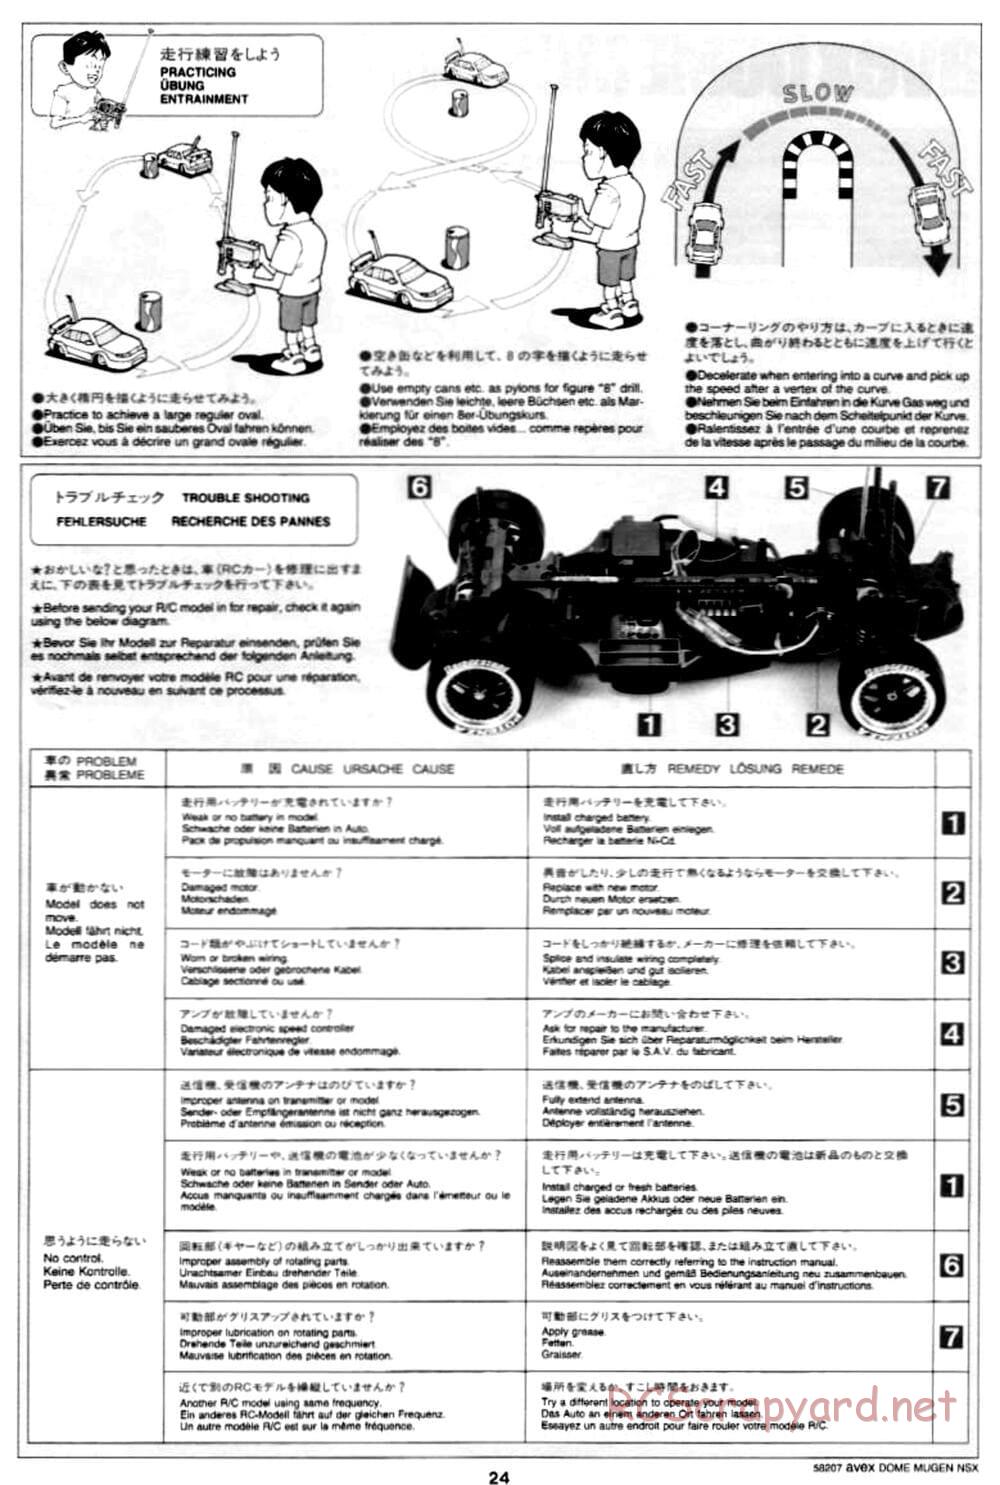 Tamiya - Avex Dome Mugen NSX - TA-03R Chassis - Manual - Page 24